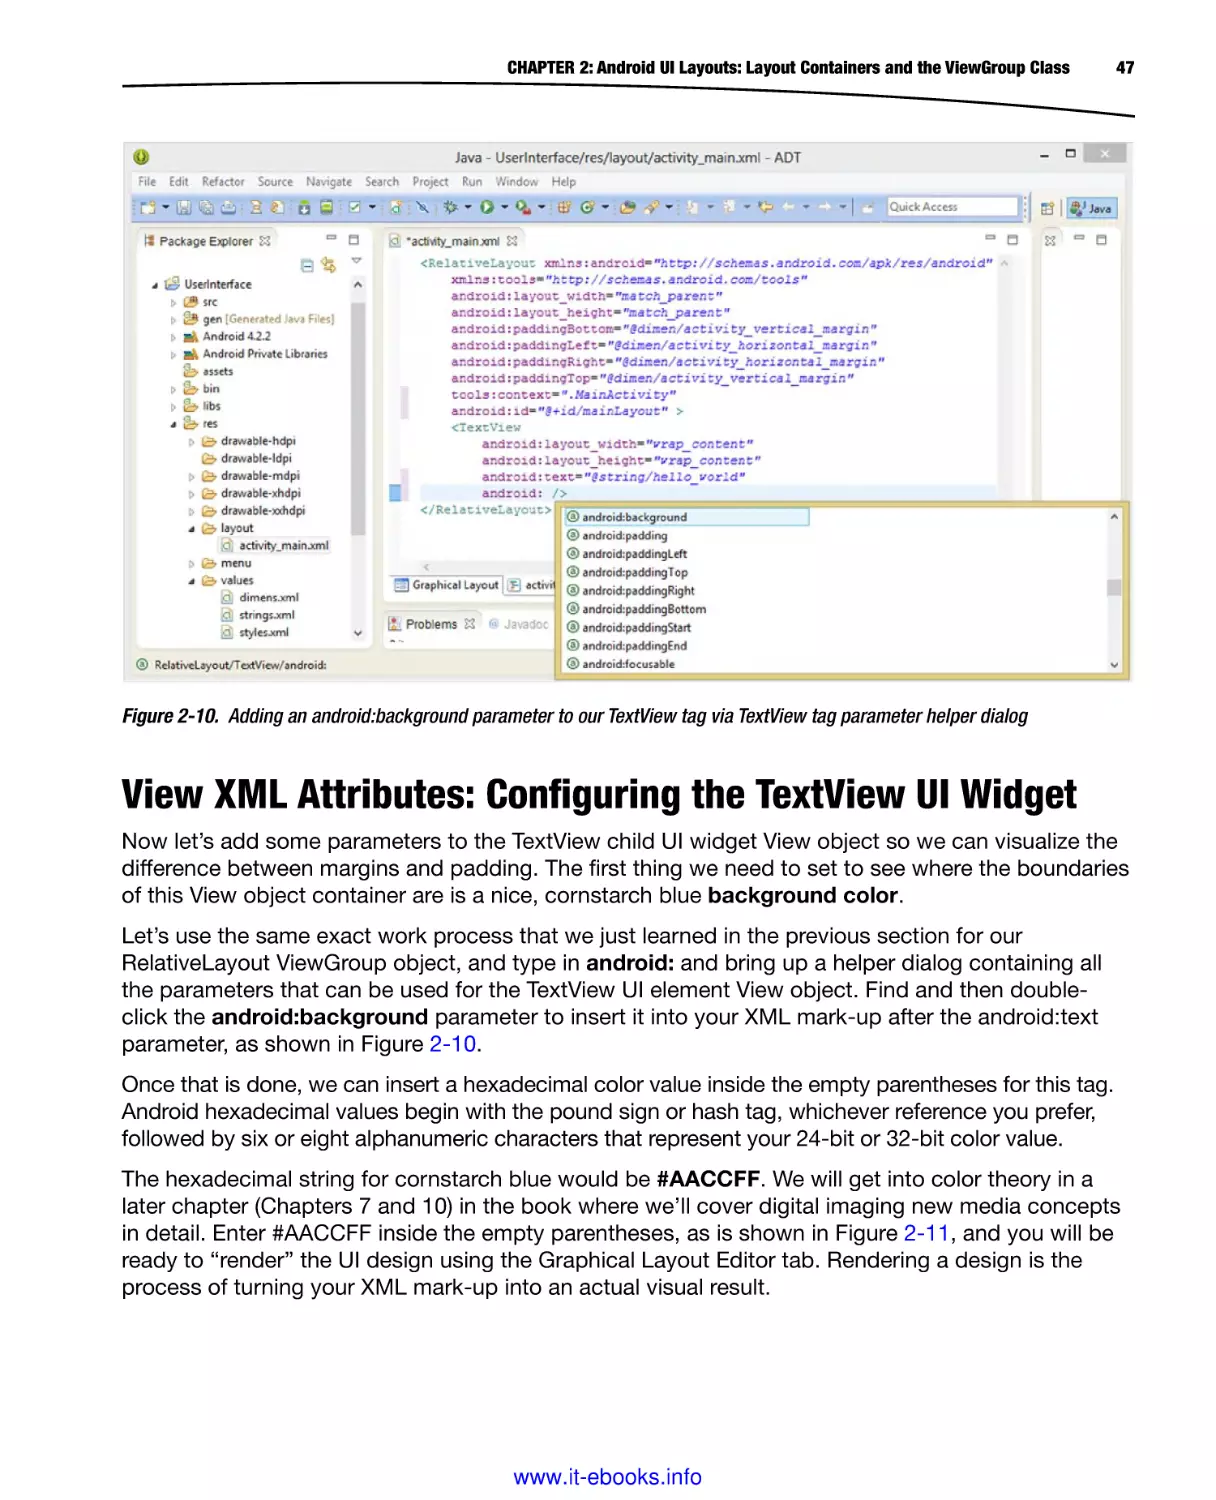 View XML Attributes